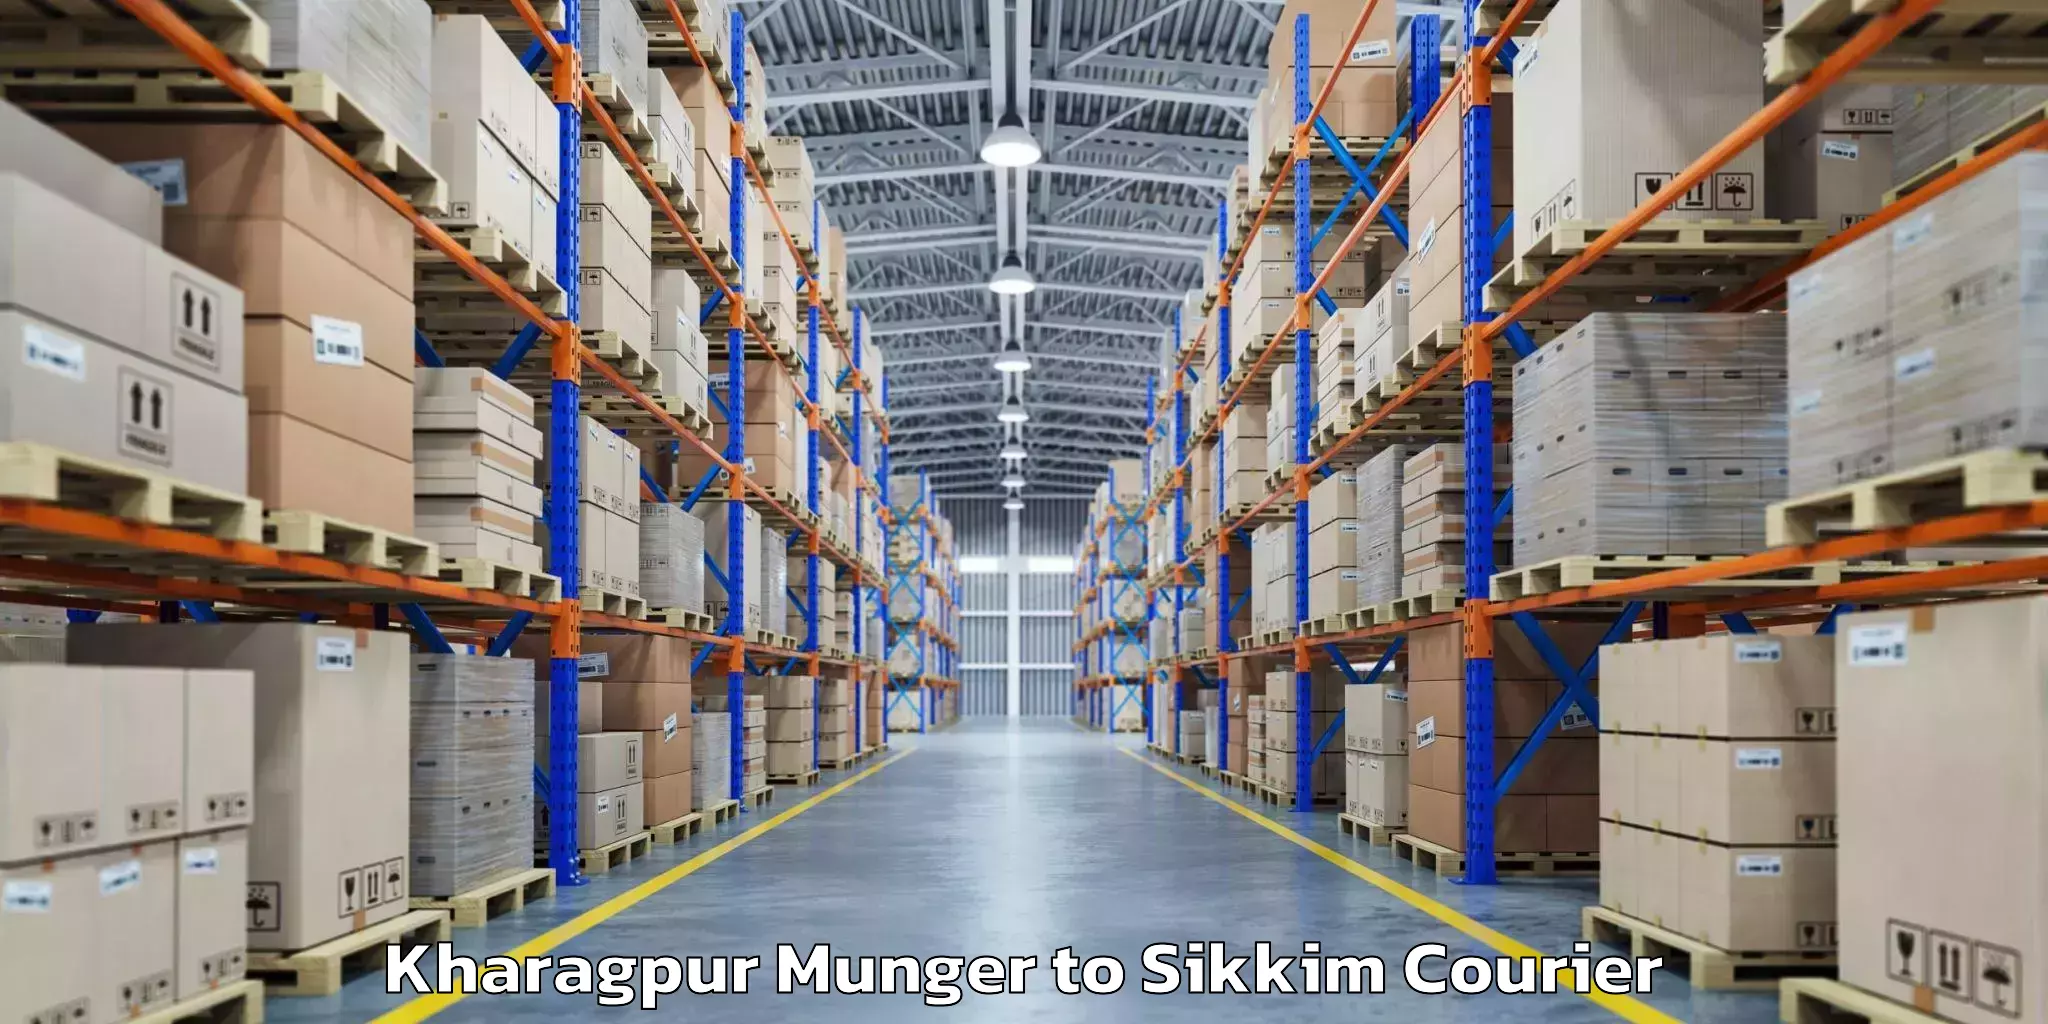 Baggage shipping experience Kharagpur Munger to Sikkim